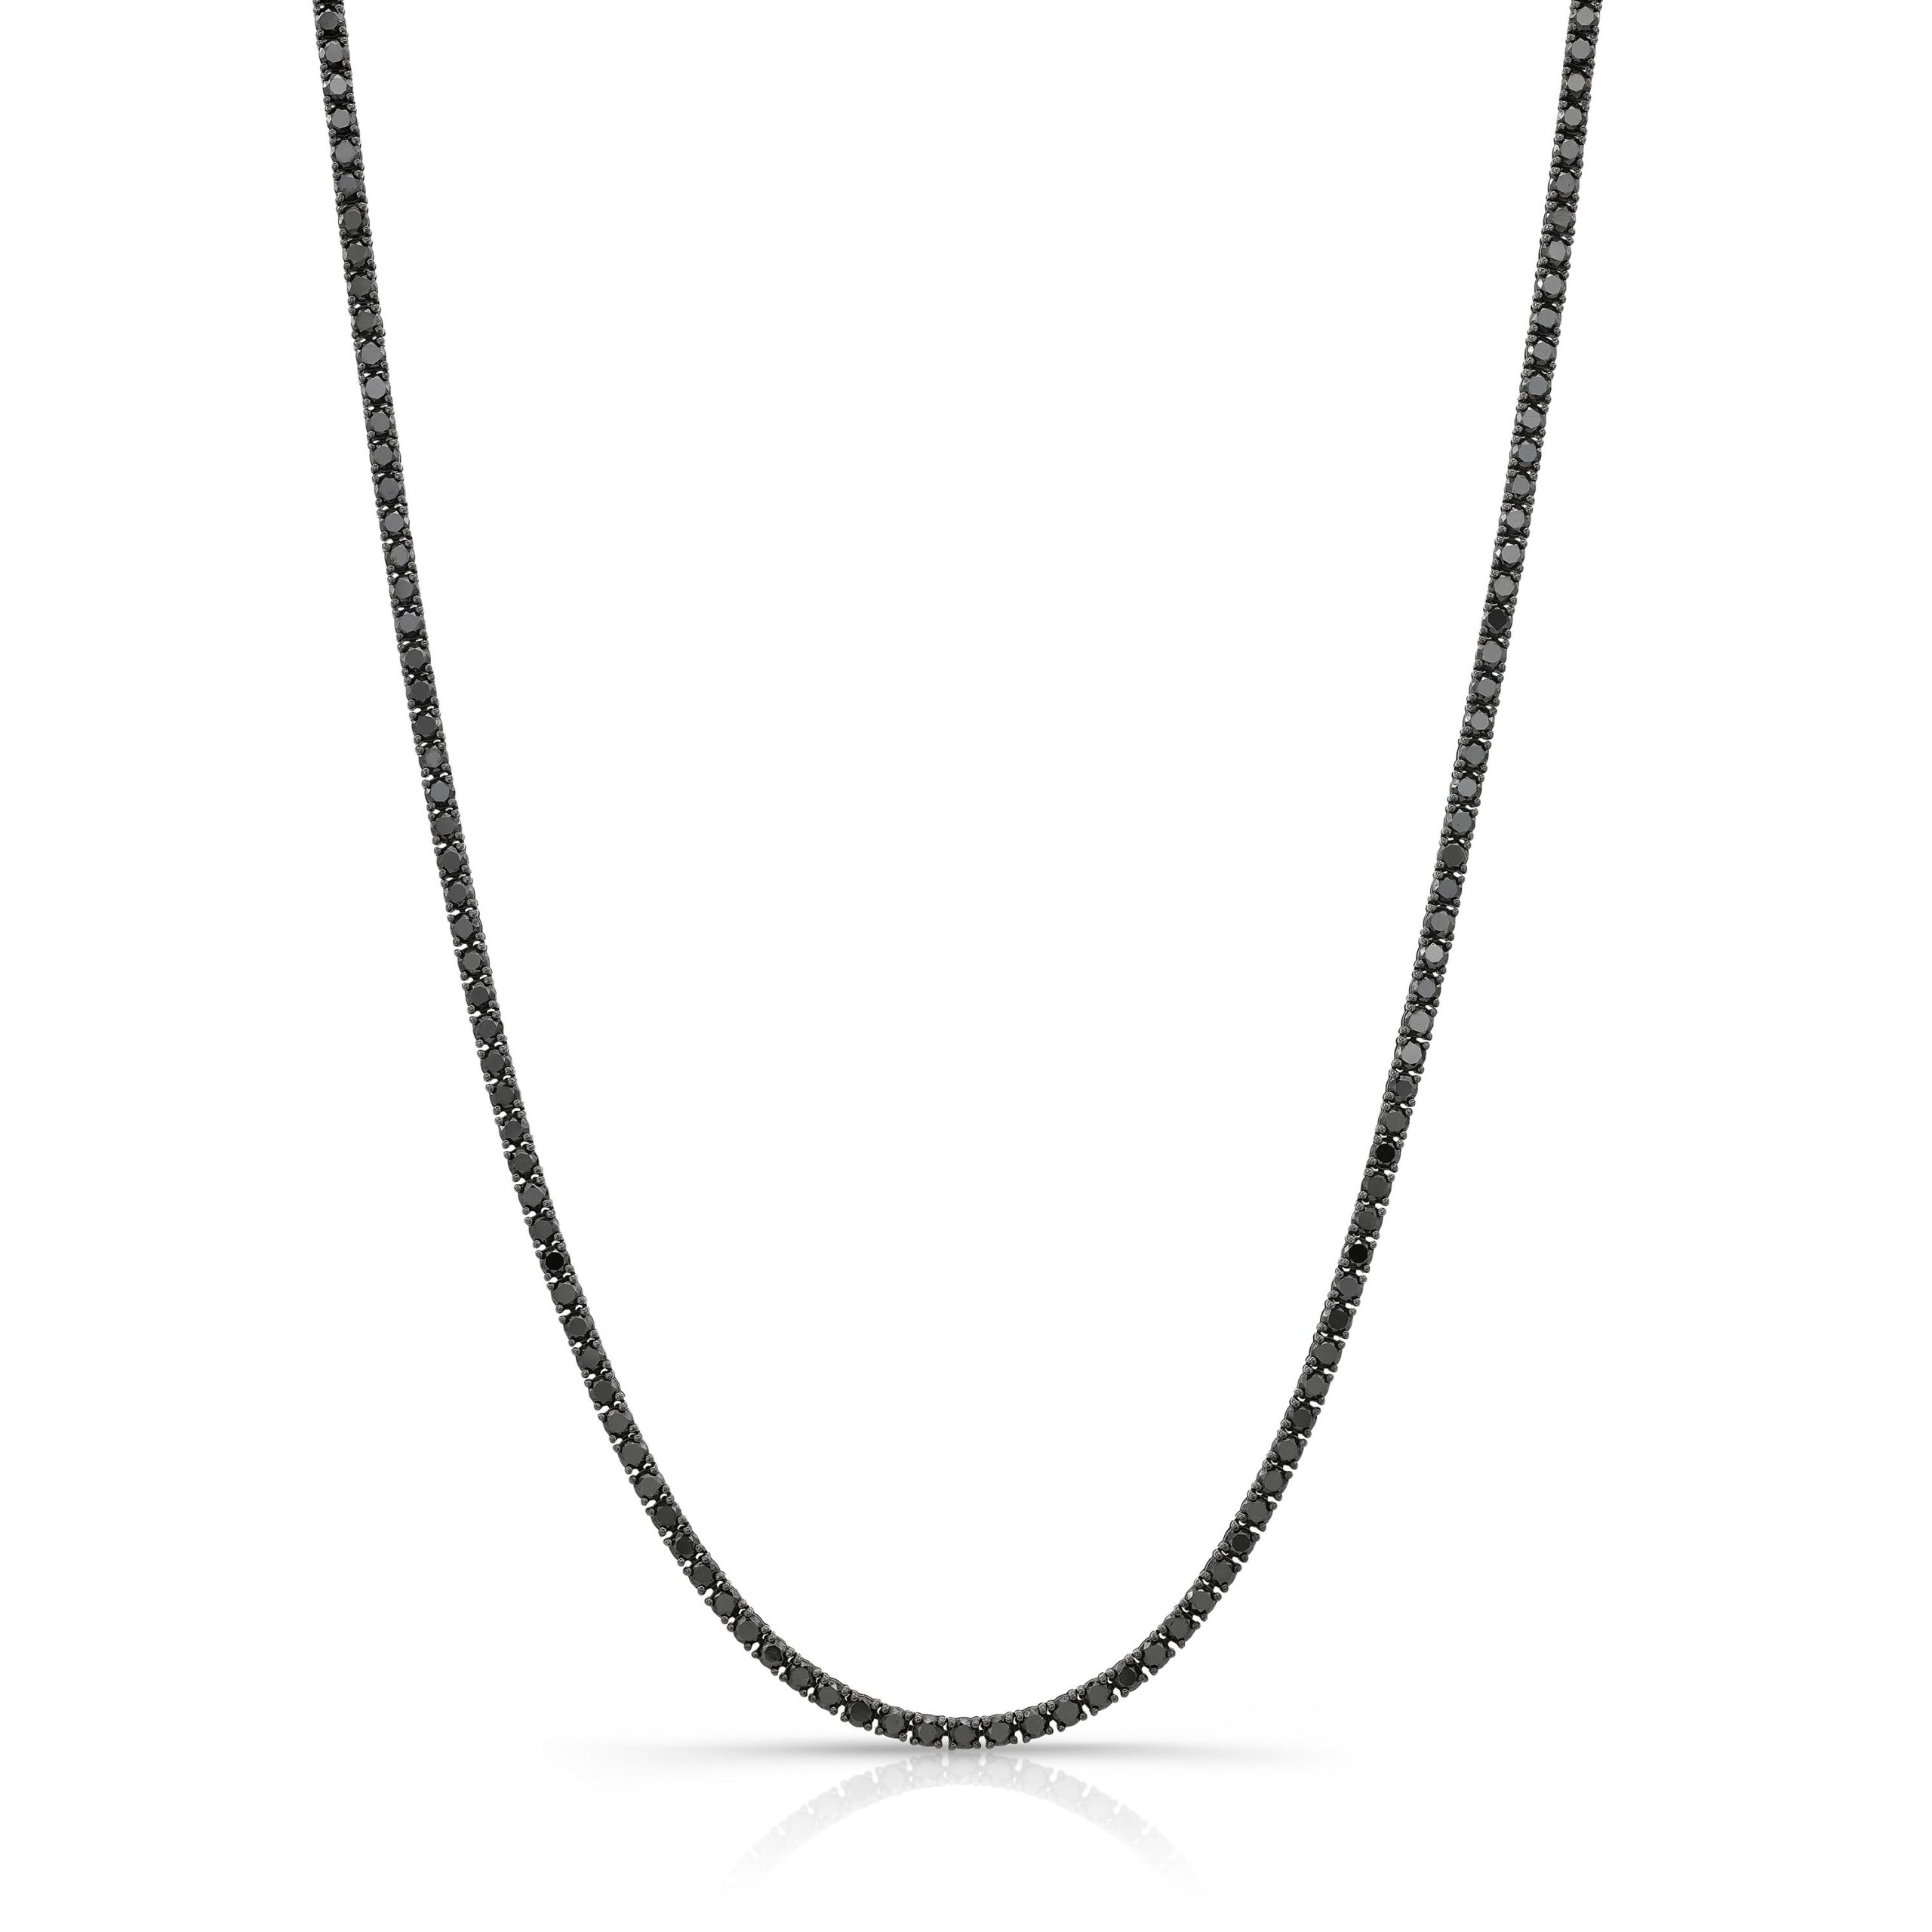 12.11ct. Black Diamond Tennis Necklace